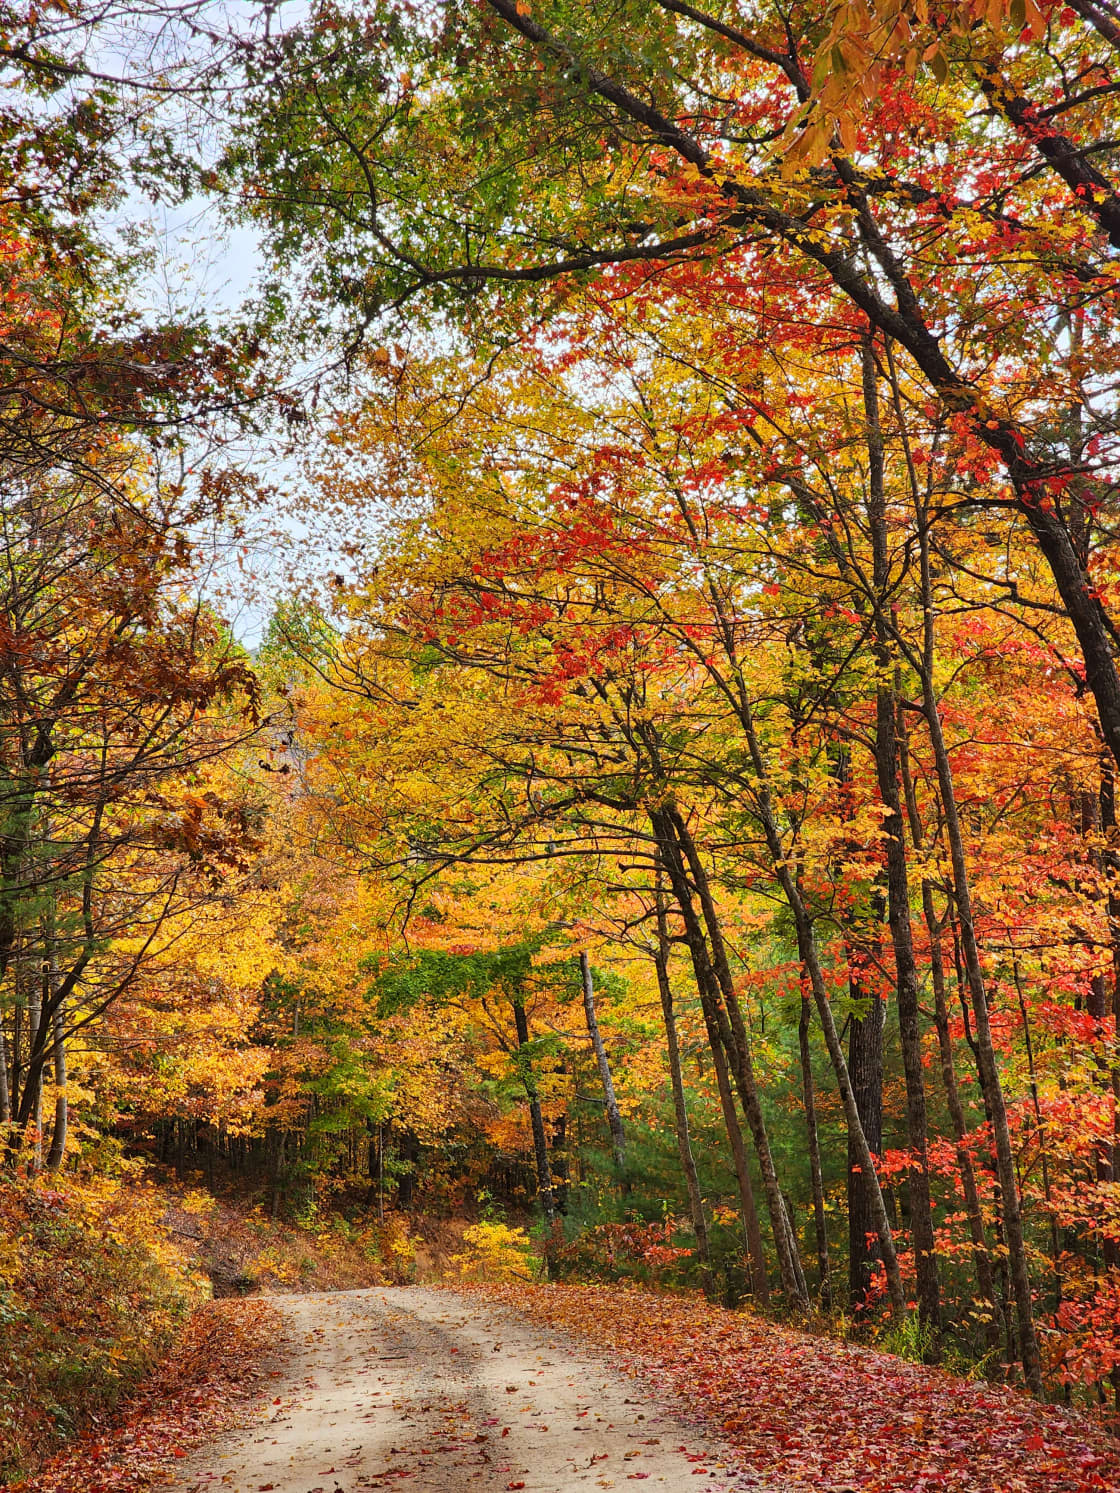 Burrell Mountain Road in the fall